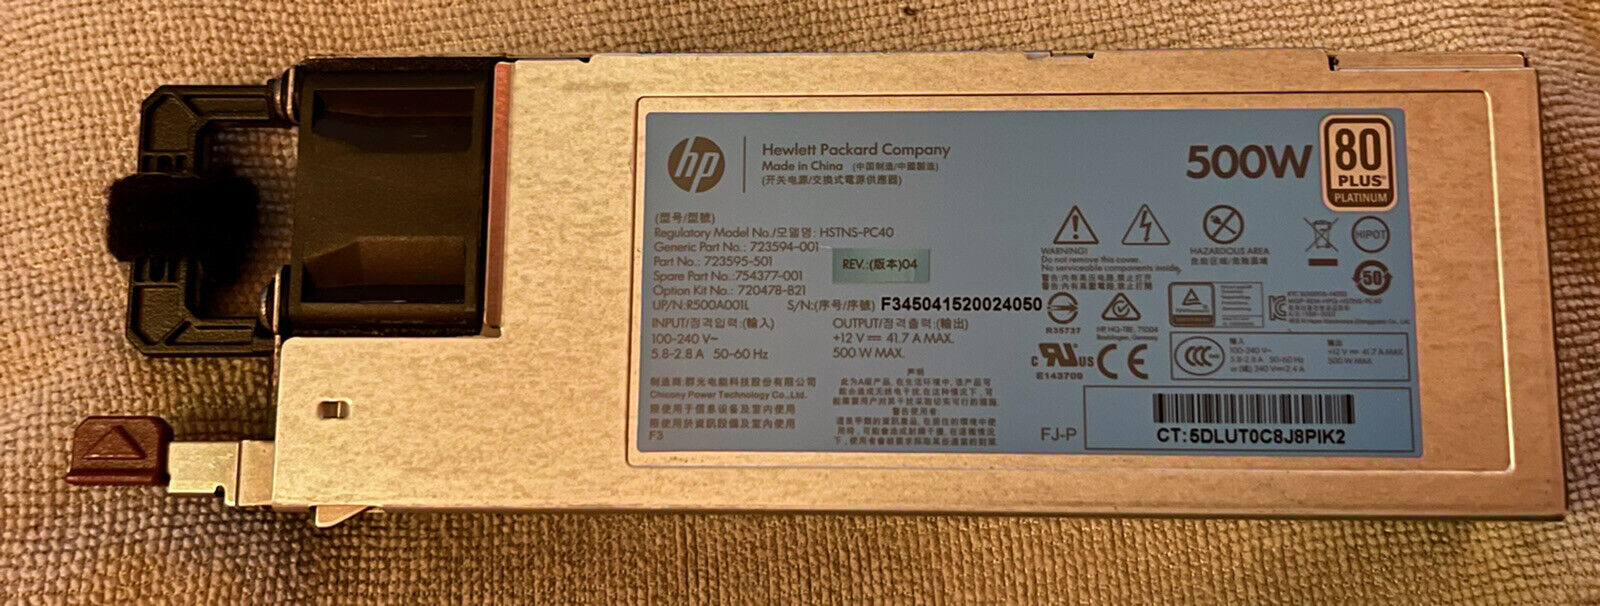 HP 500W Server Power Supply DL380 ML350T G9 723595-501 723594-001 720478-B21